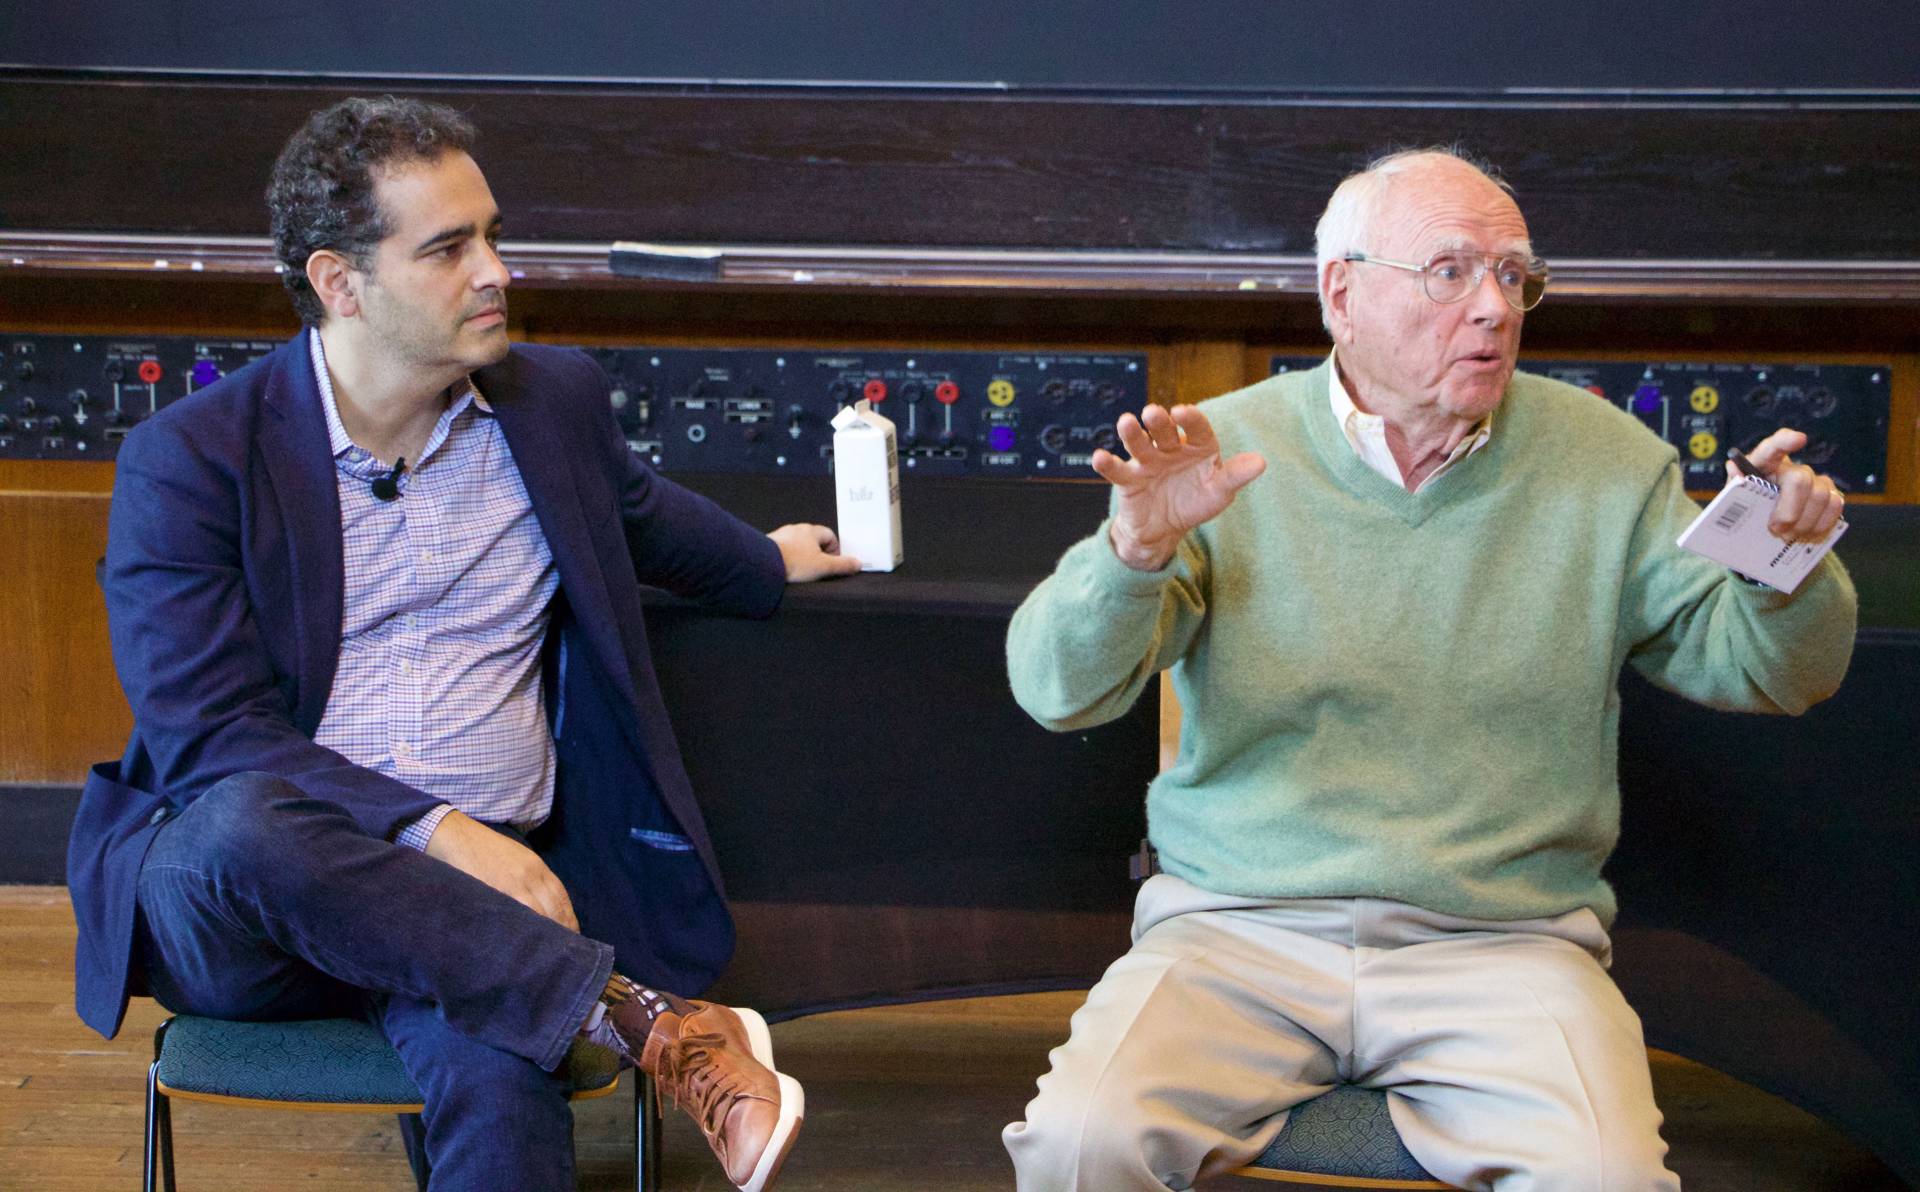 Jeff Kreisler and Howard “Pete” Colhoun speak to an audience